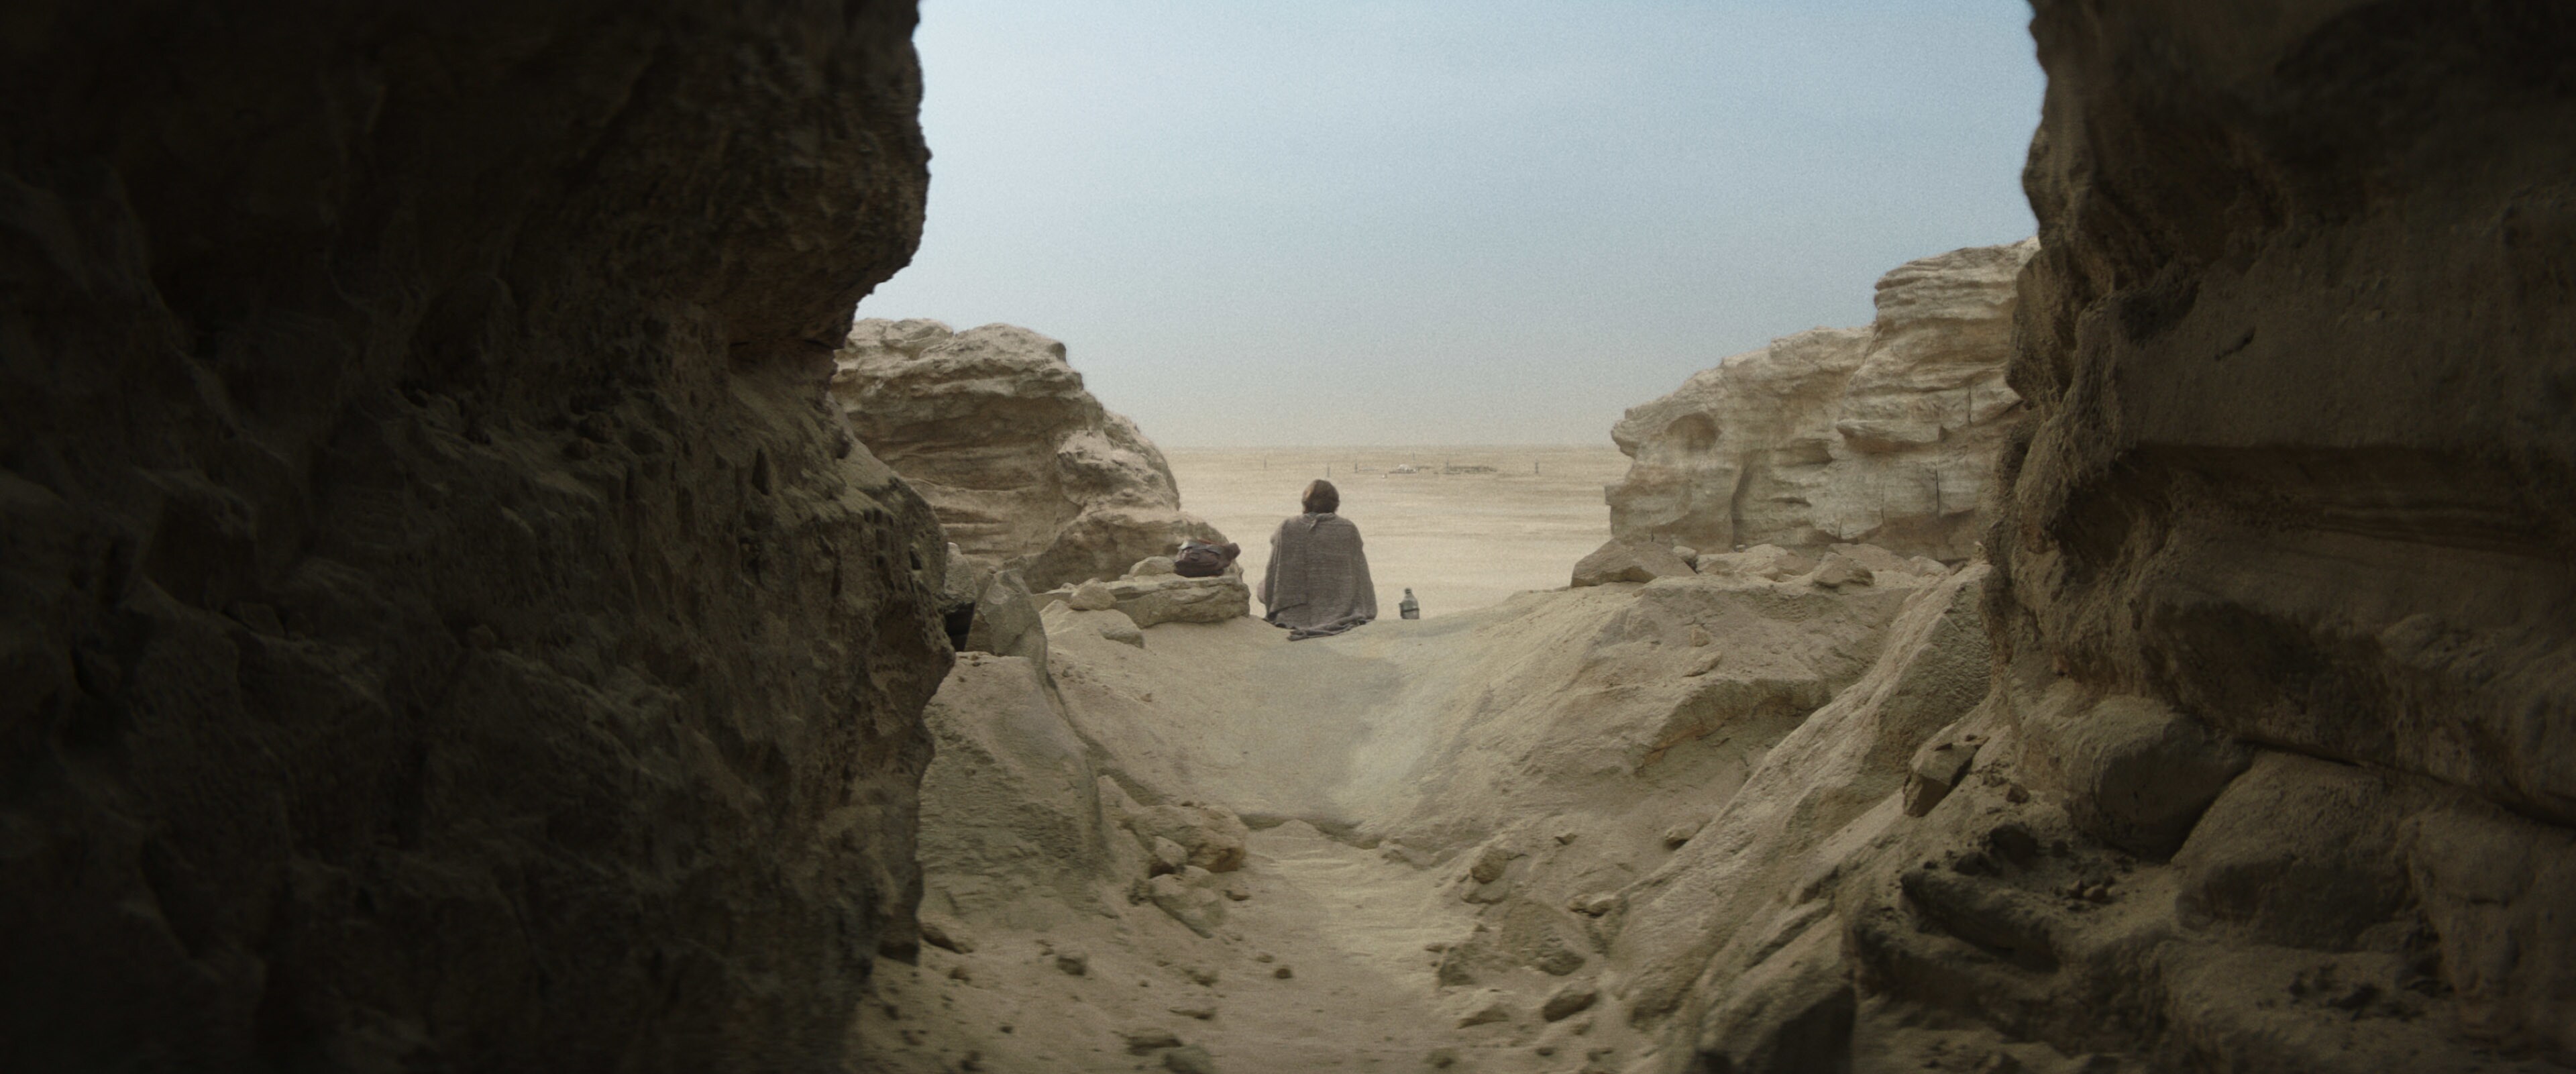 Obi-Wan Kenobi sits in a rock formation.